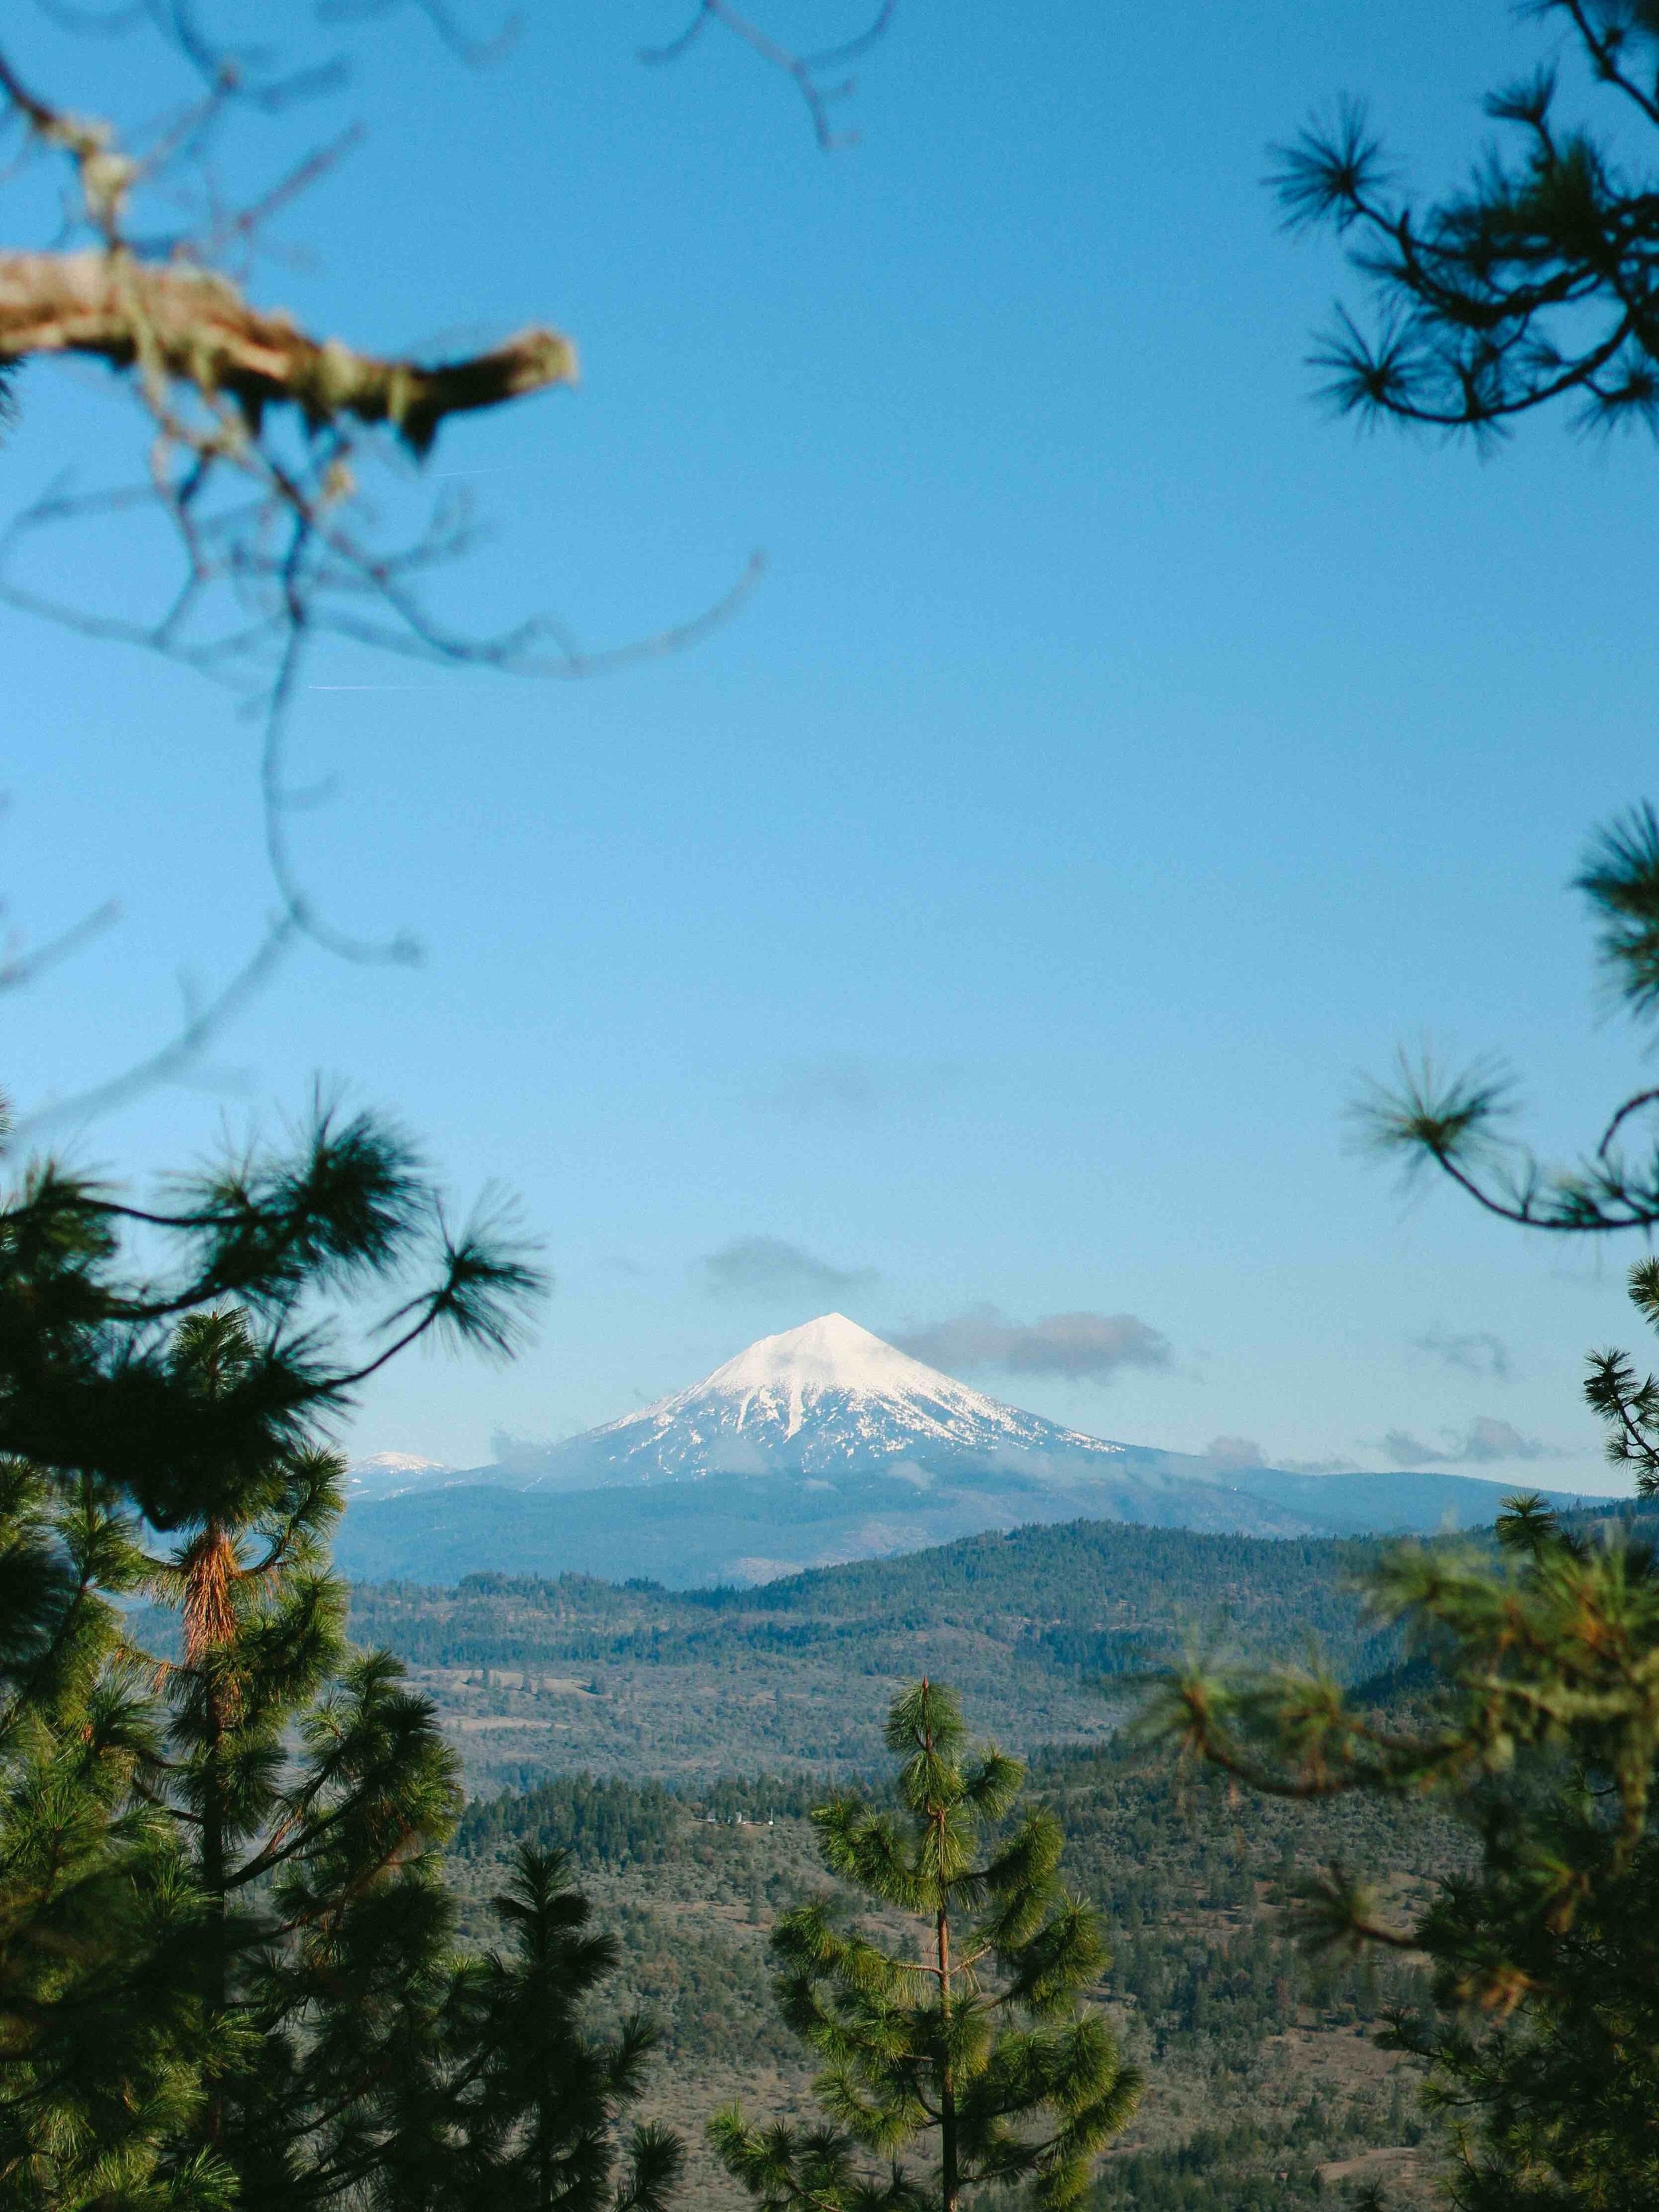 View of Mt. McLoughlin from Roxy Ann Peak